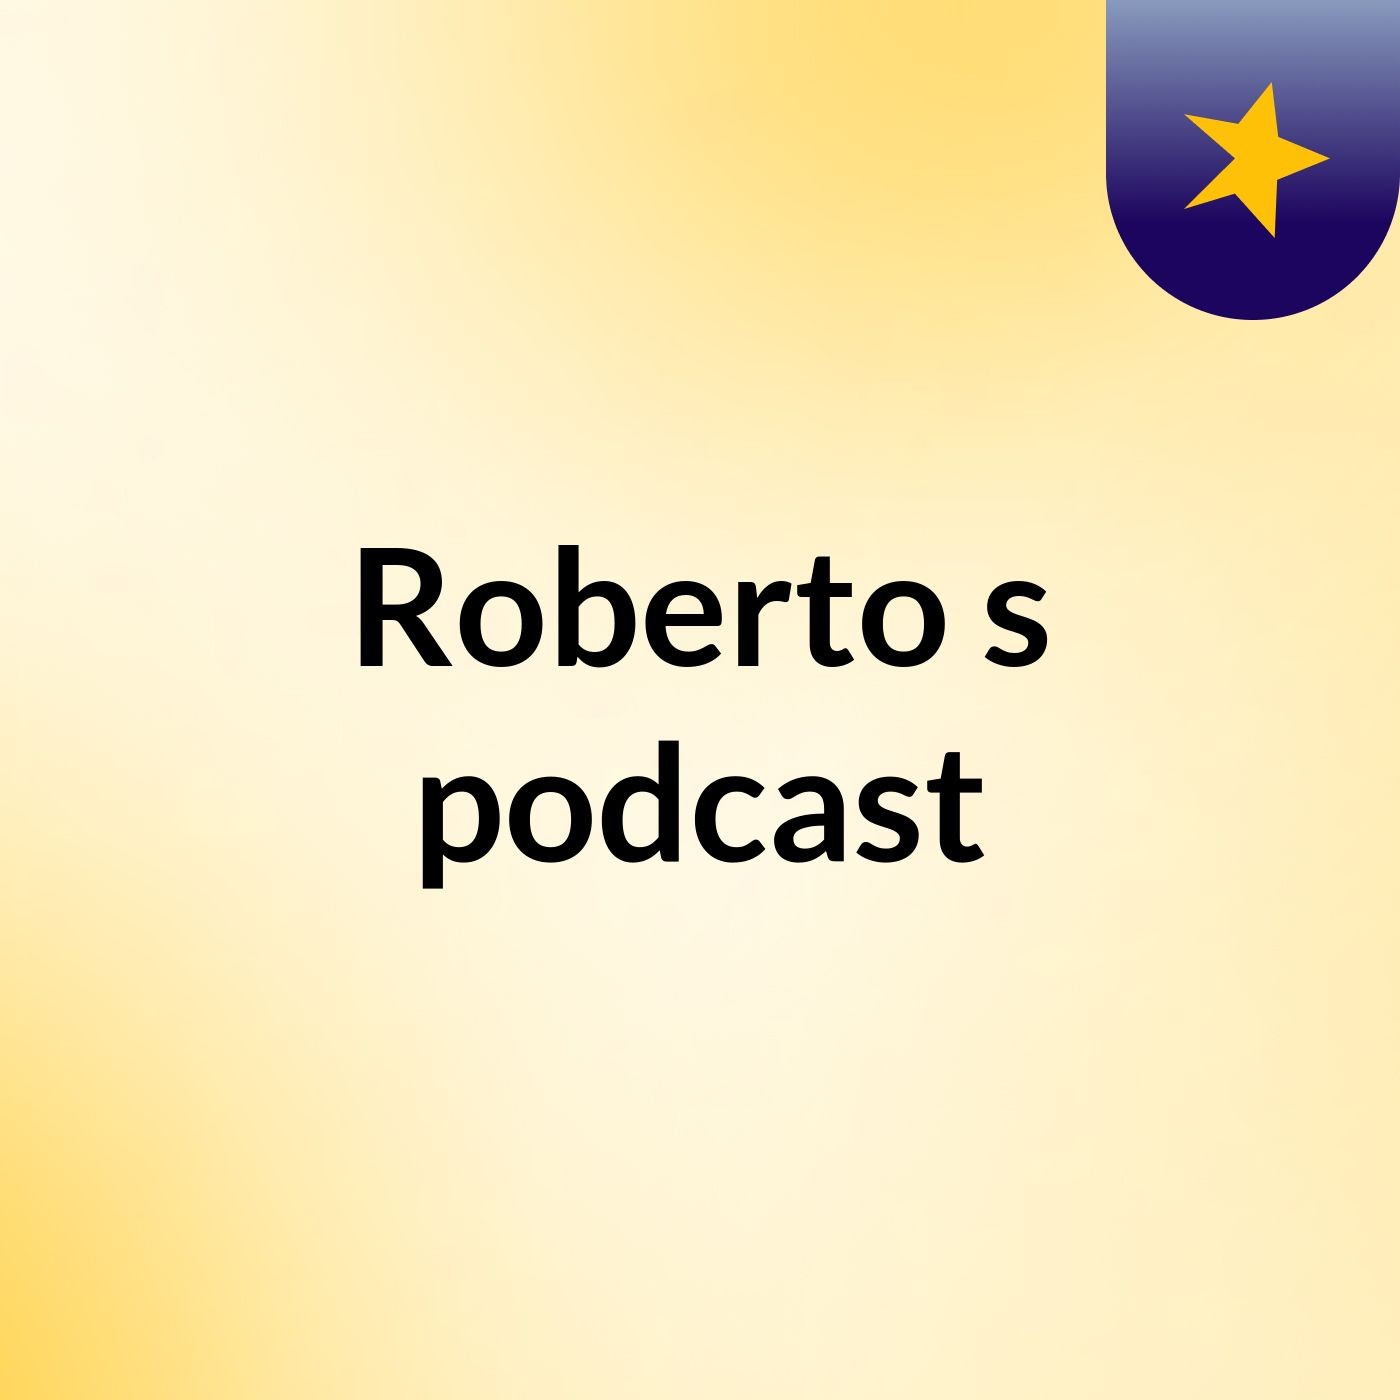 Roberto's podcast